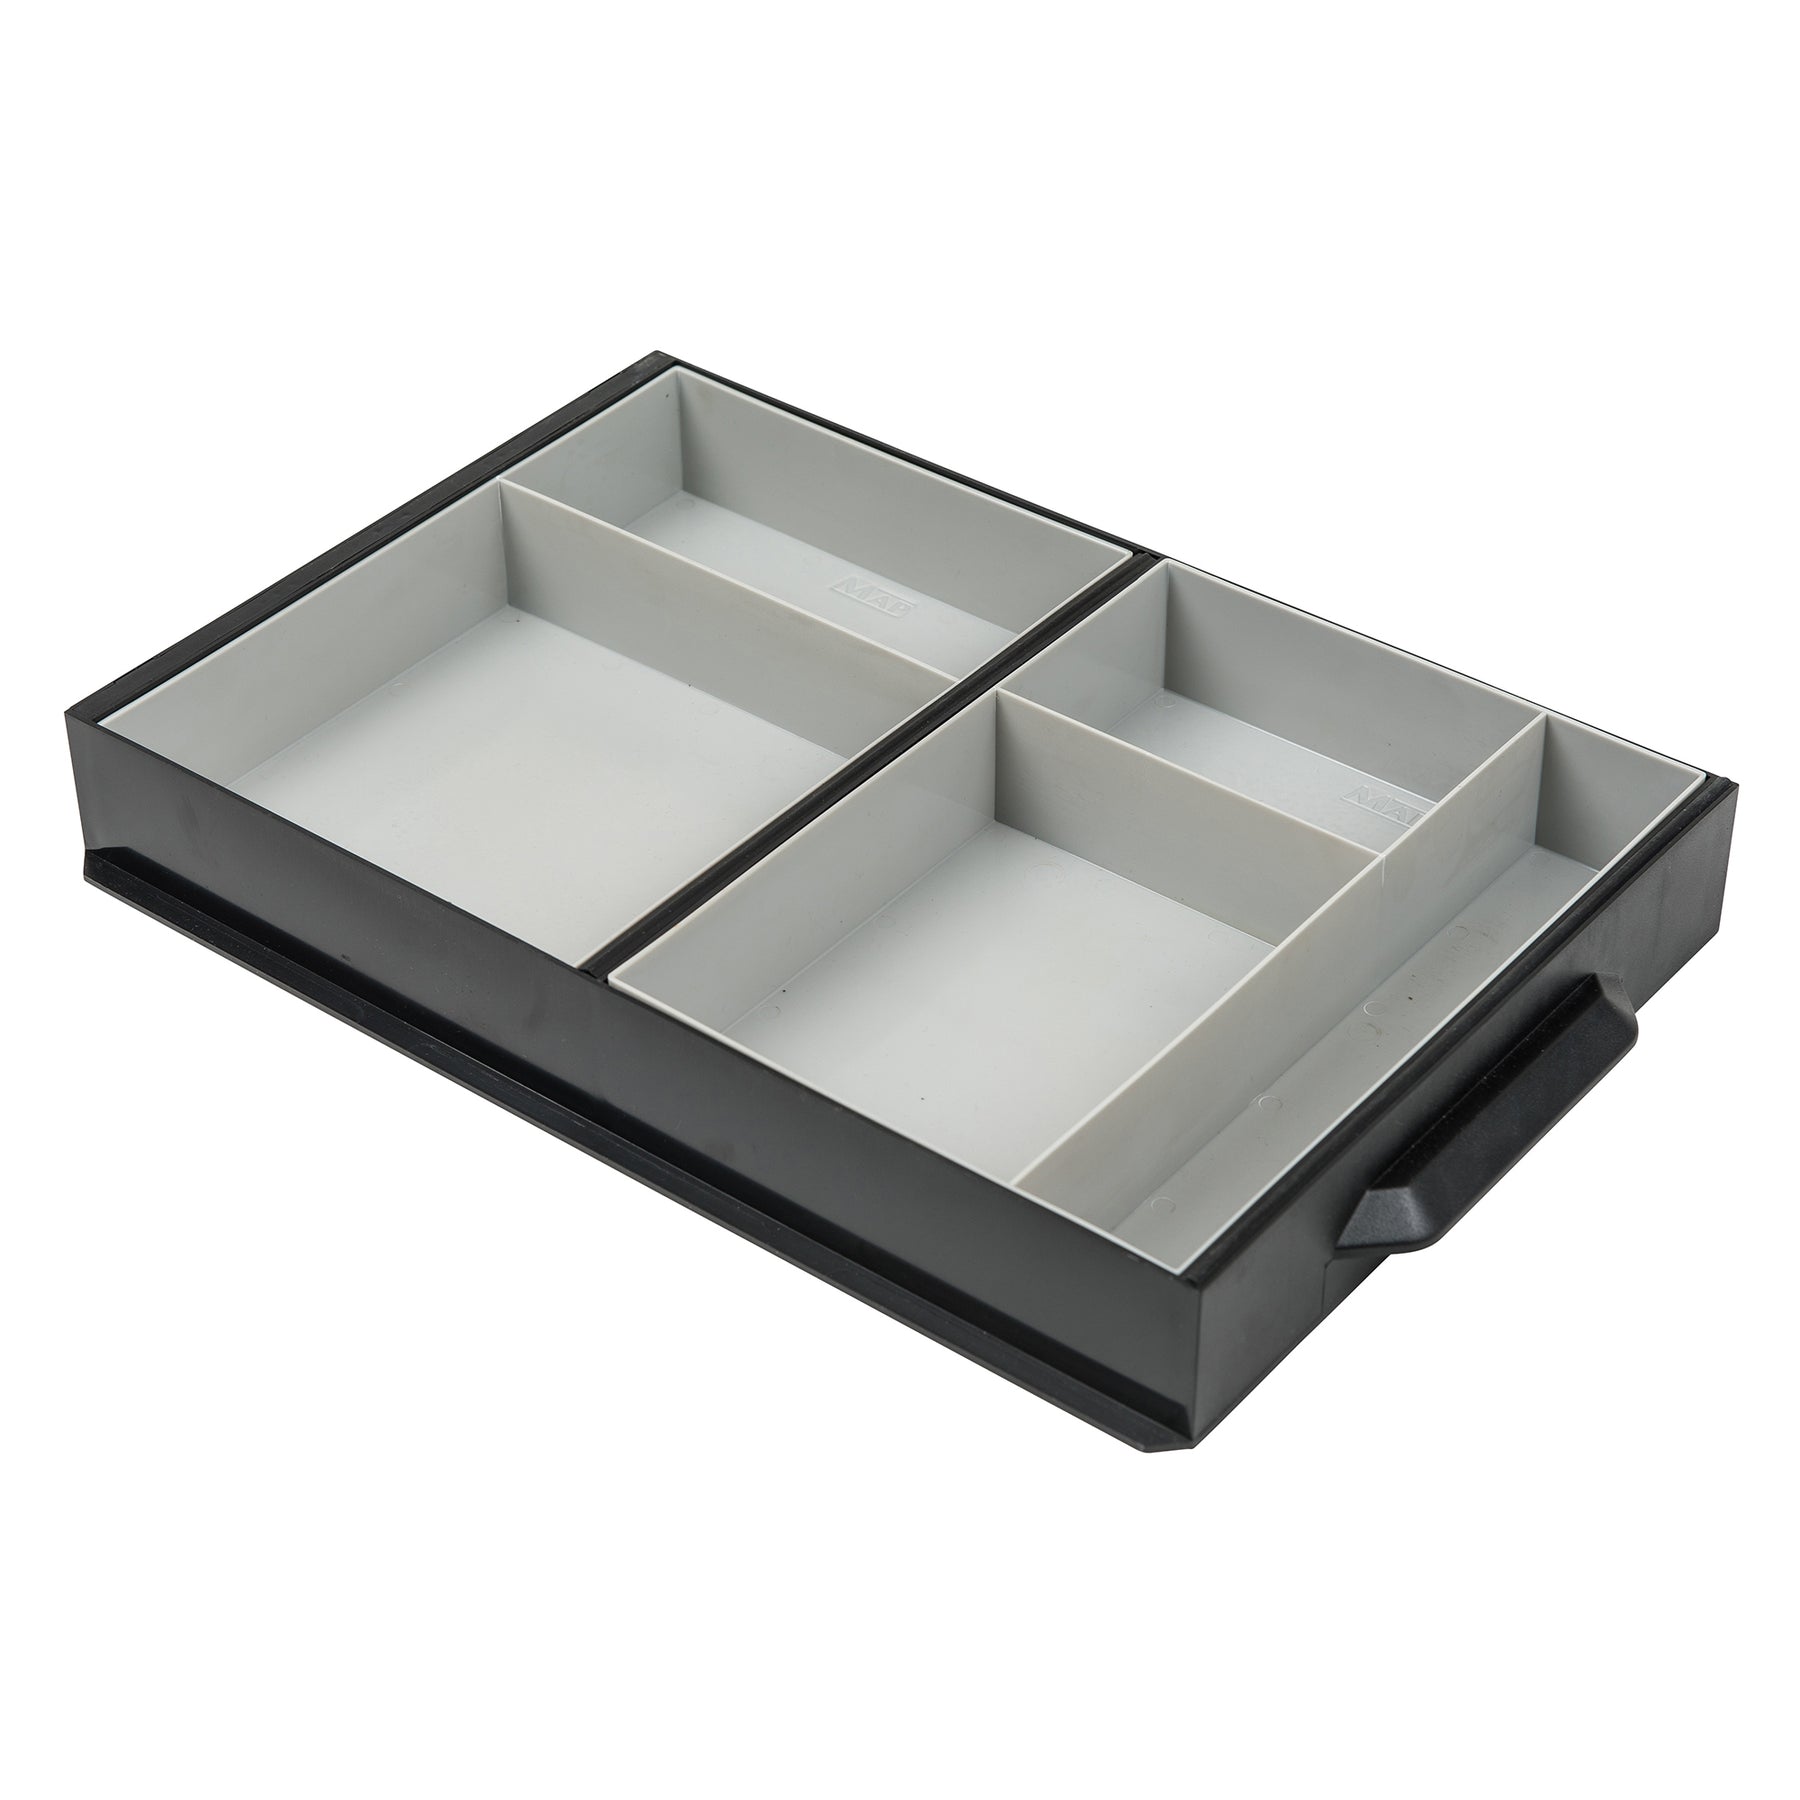 Seatbox drawer inserts